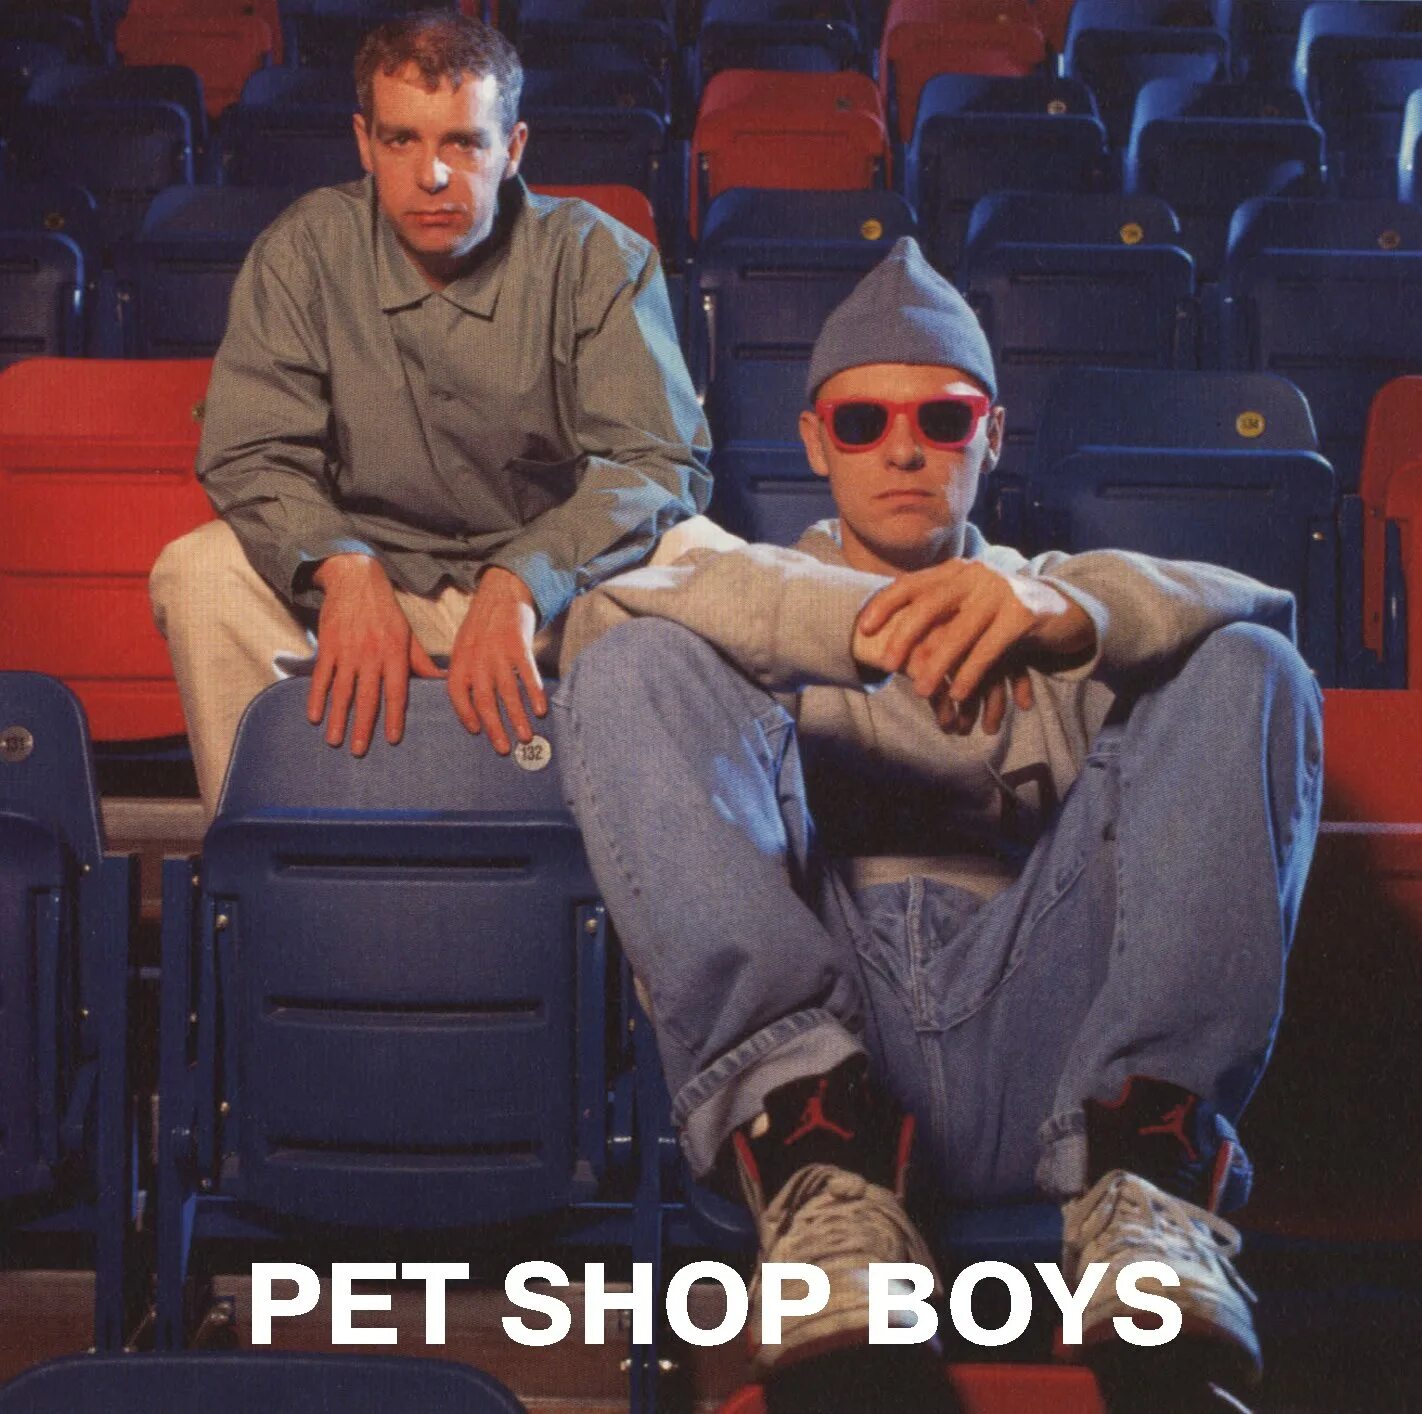 Pet shop boys. Pet shop boys фото. Pet shop boys Single. Pet shop boys хиты.